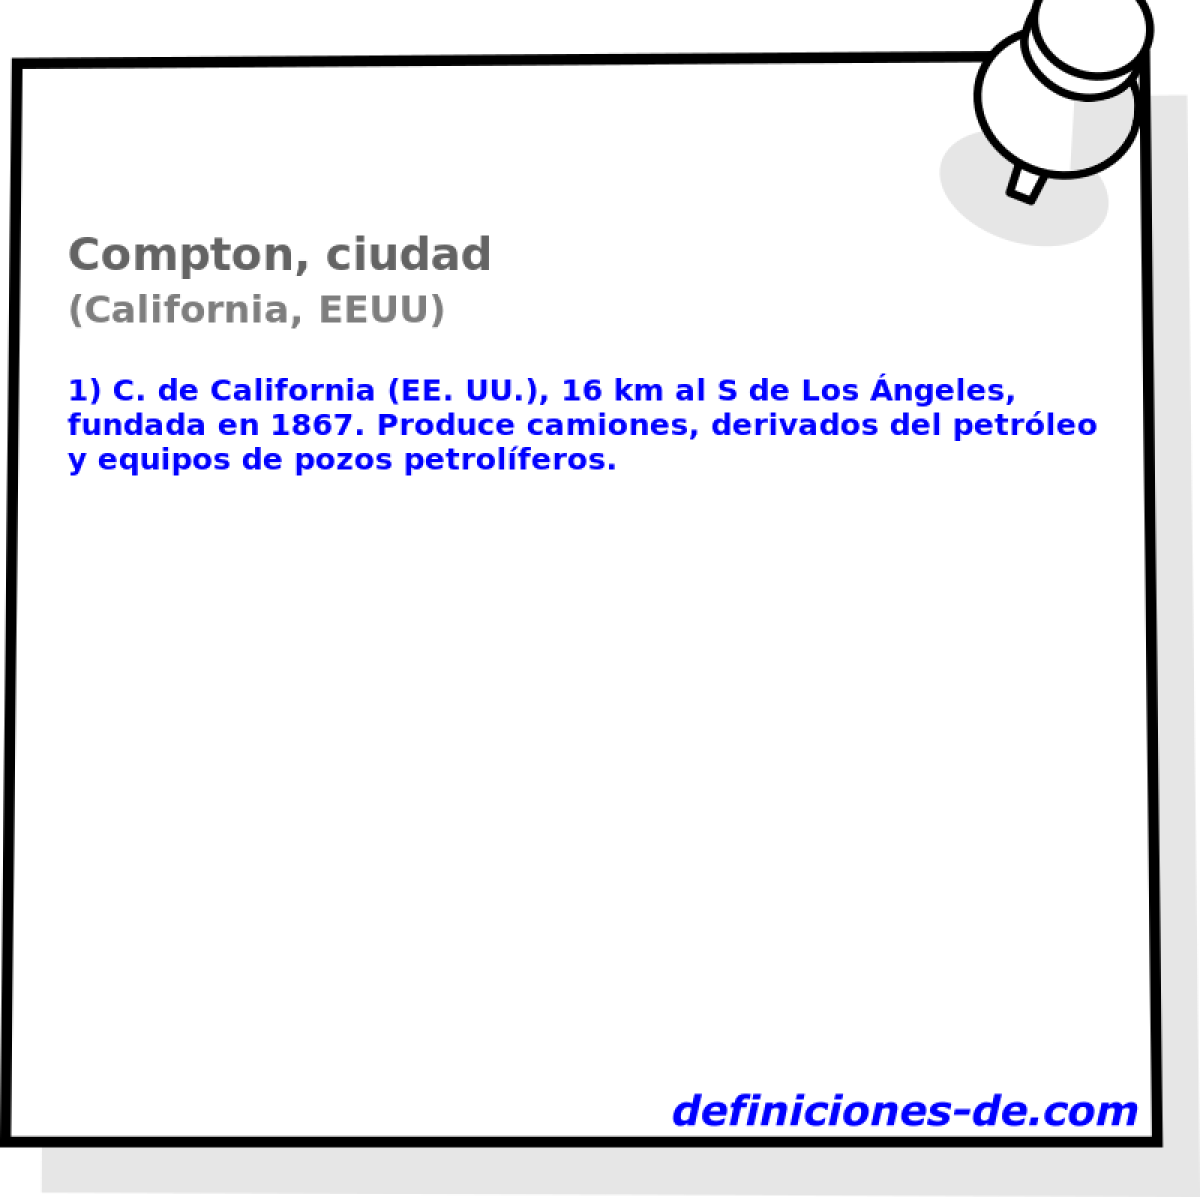 Compton, ciudad (California, EEUU)